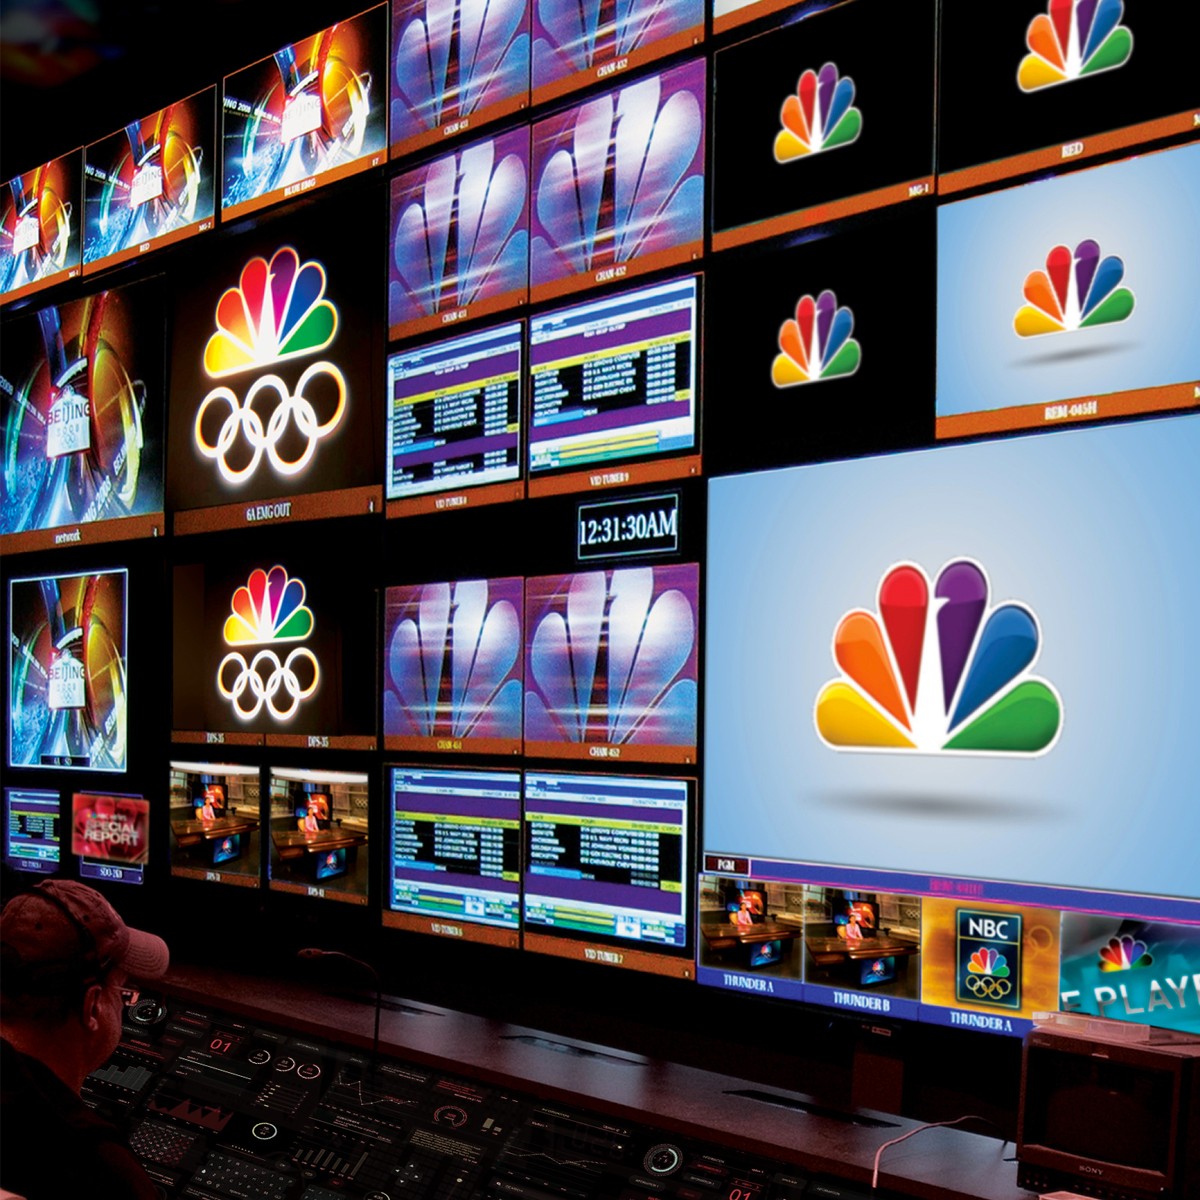 SWOT Analysis of NBC - NBC Control